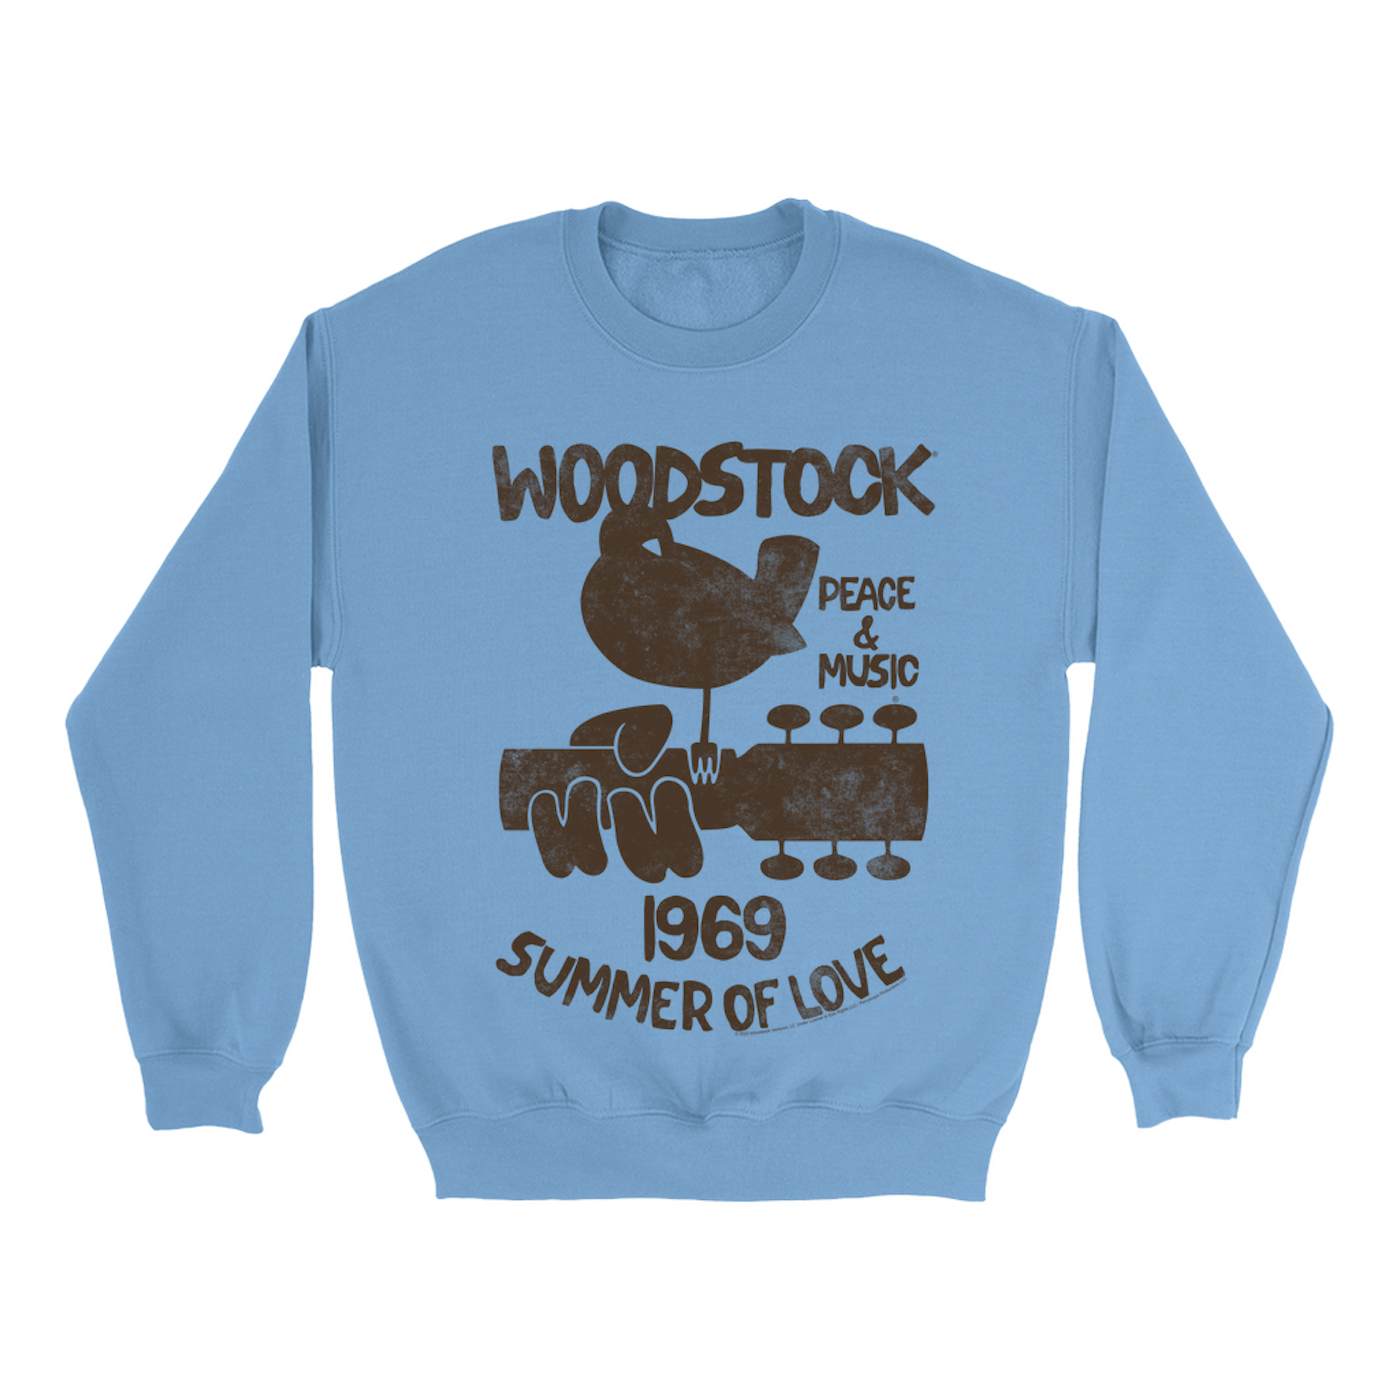 Woodstock Bright Colored Sweatshirt | Peace And Music 1969 Logo Image Distressed Woodstock Sweatshirt